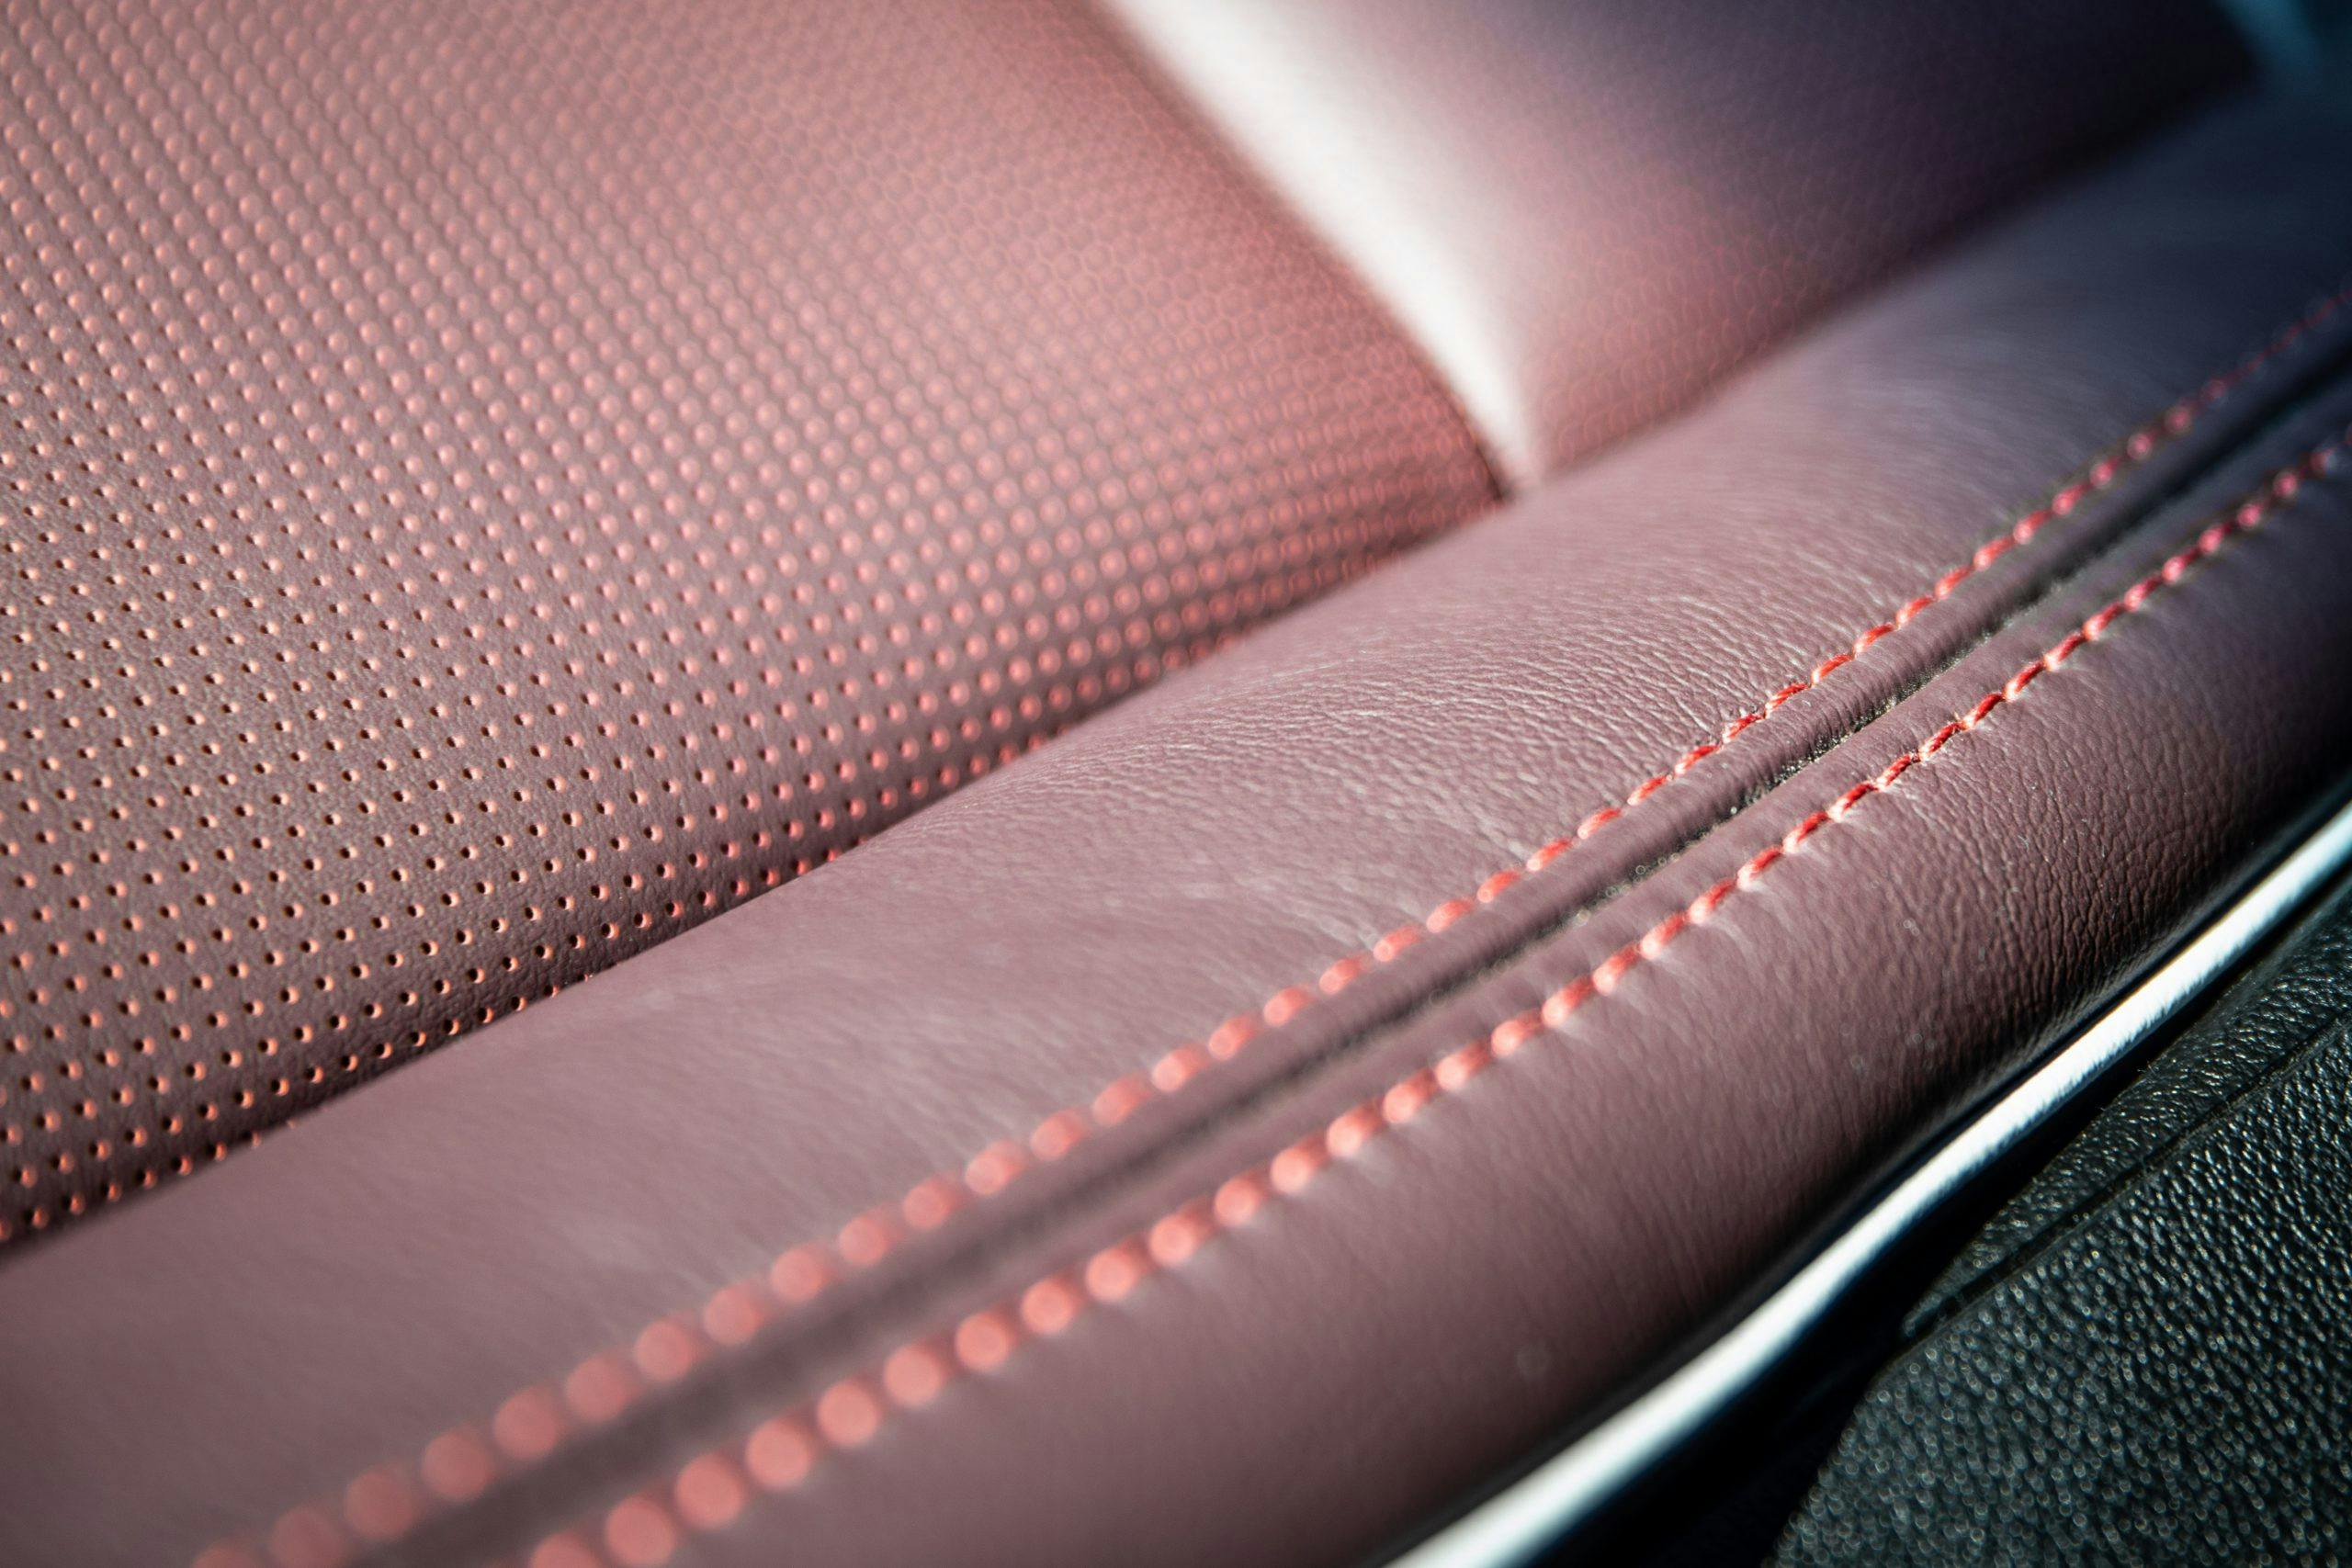 2020 Cadillac CT4-V 24 seat stitching